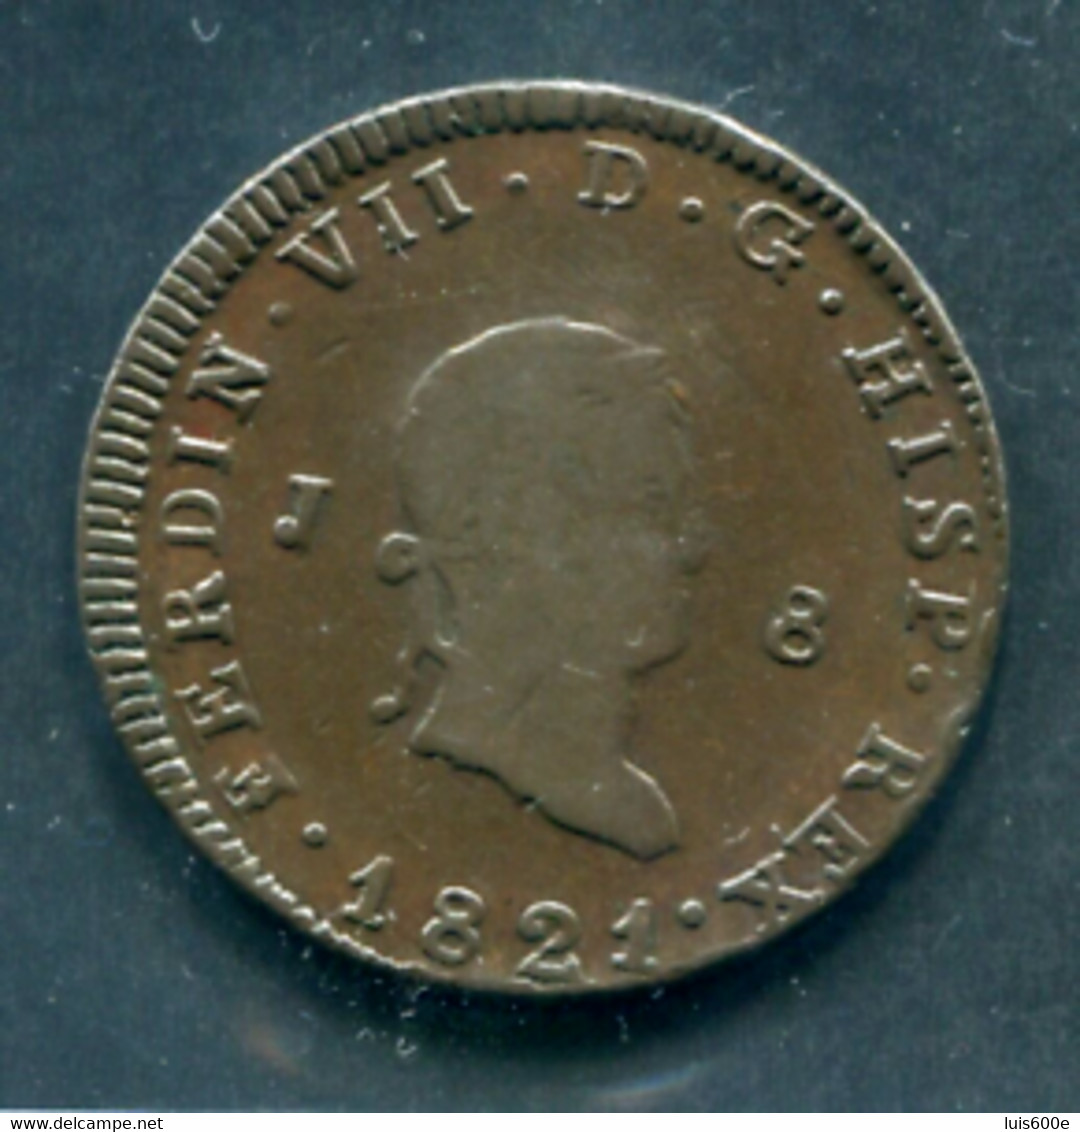 1821.ESPAÑA.MONEDA.FERNANDO VII.  8 MARAVEDIS COBRE-MBC - Monete Provinciali